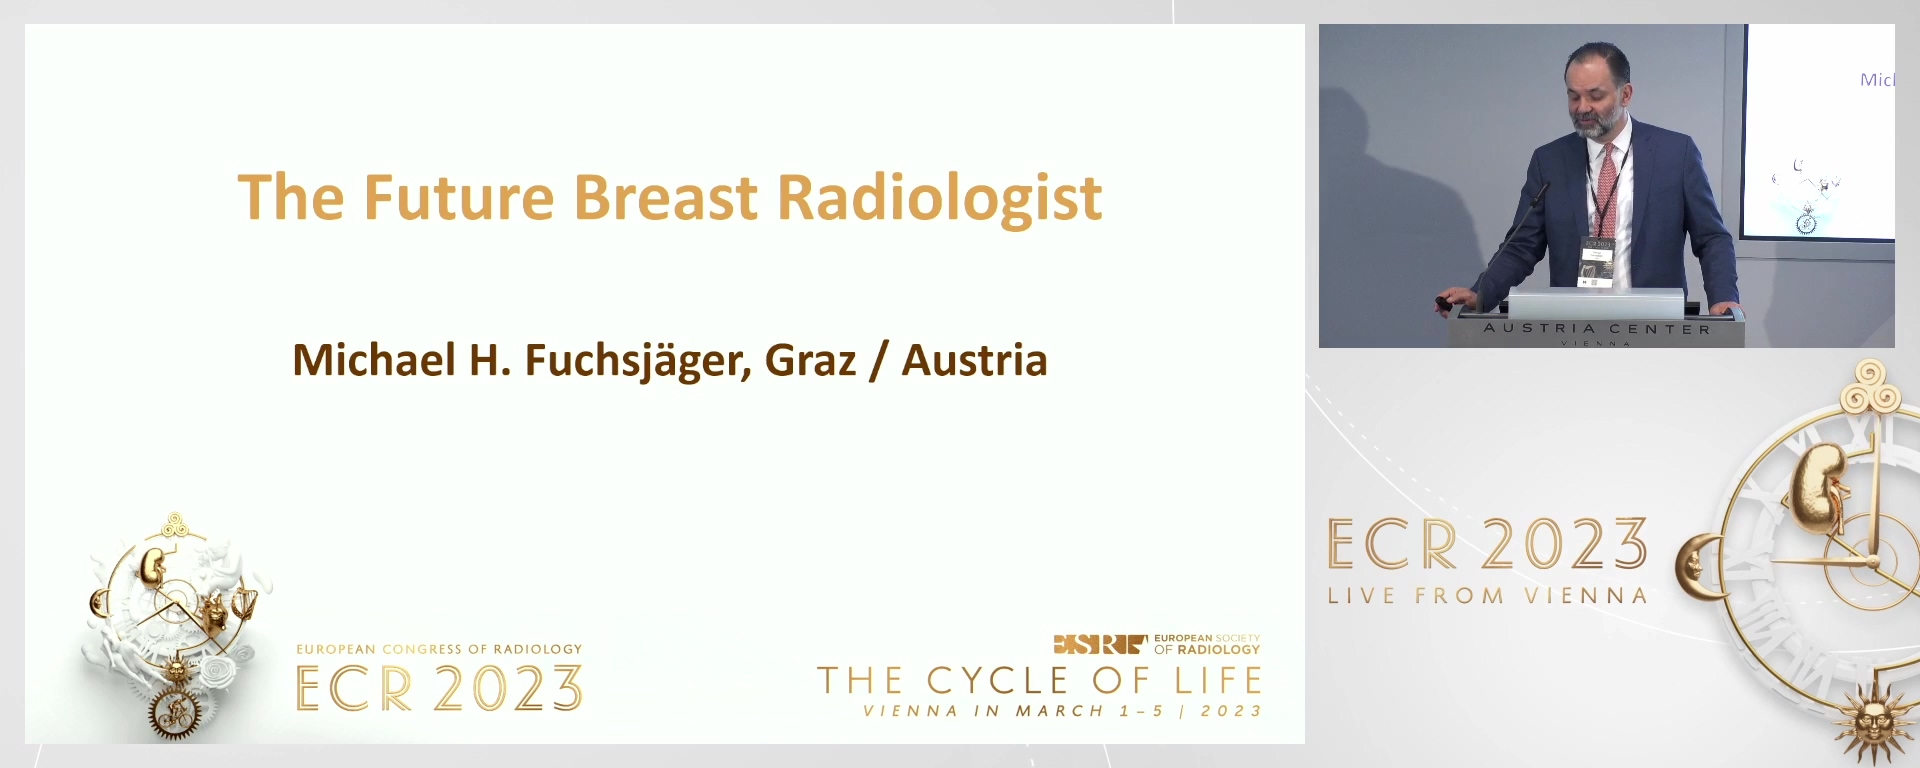 The future breast radiologist